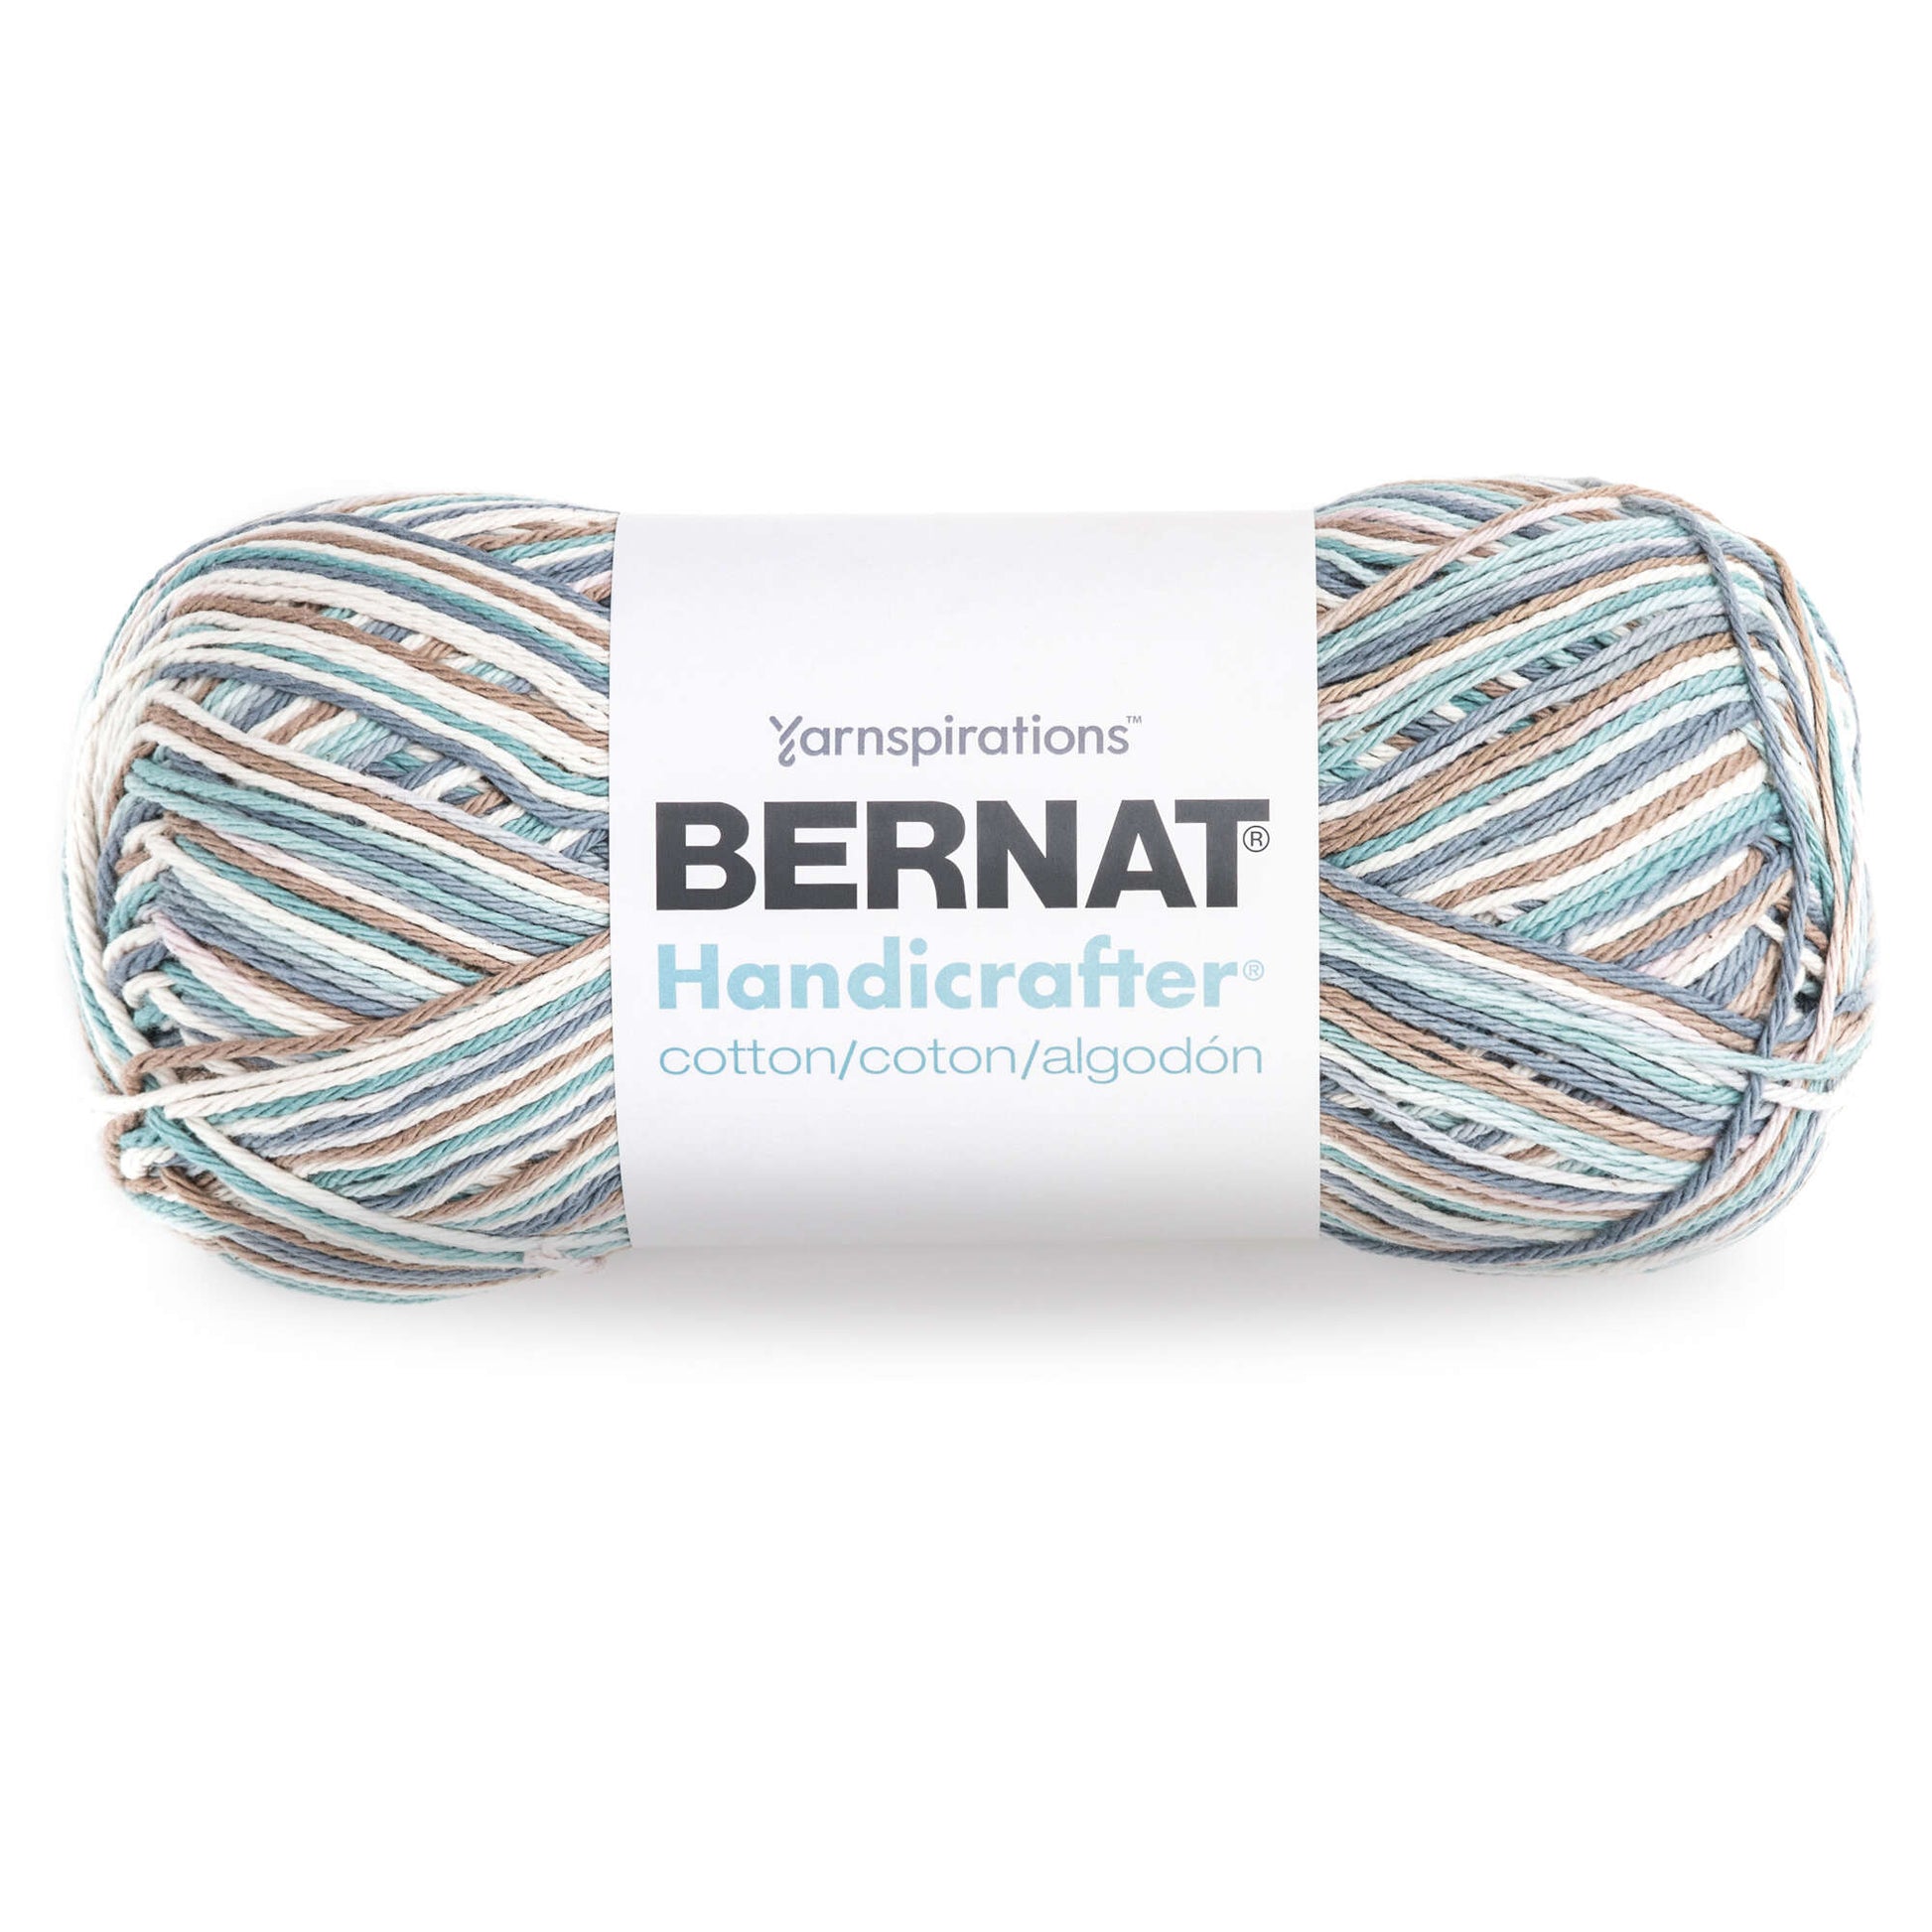 Bernat Handicrafter Cotton Ombres Yarn (340g/12oz) - Discontinued Shades Tiara